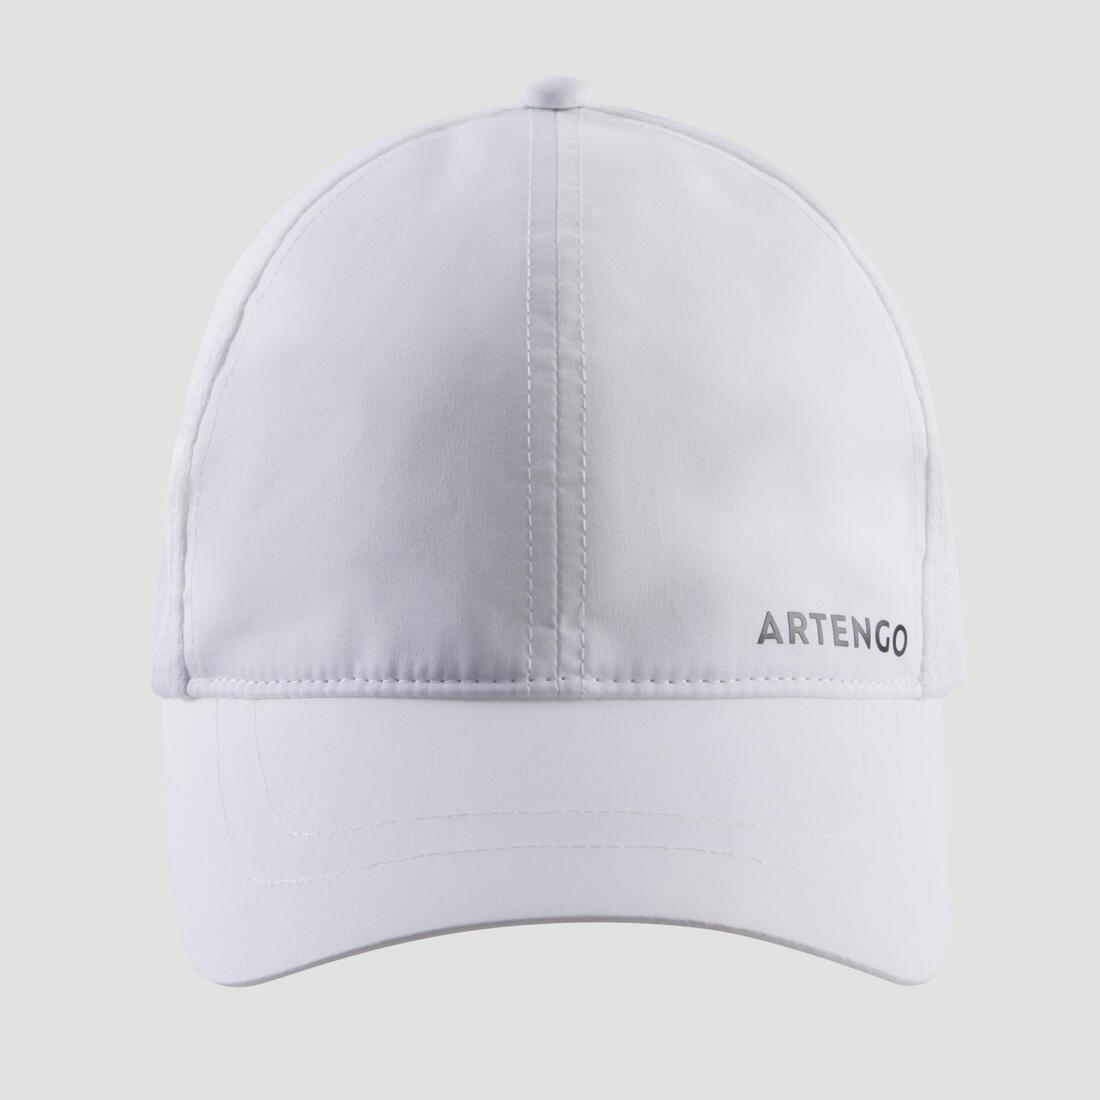 ARTENGO - Tennis Cap Tc 100, White